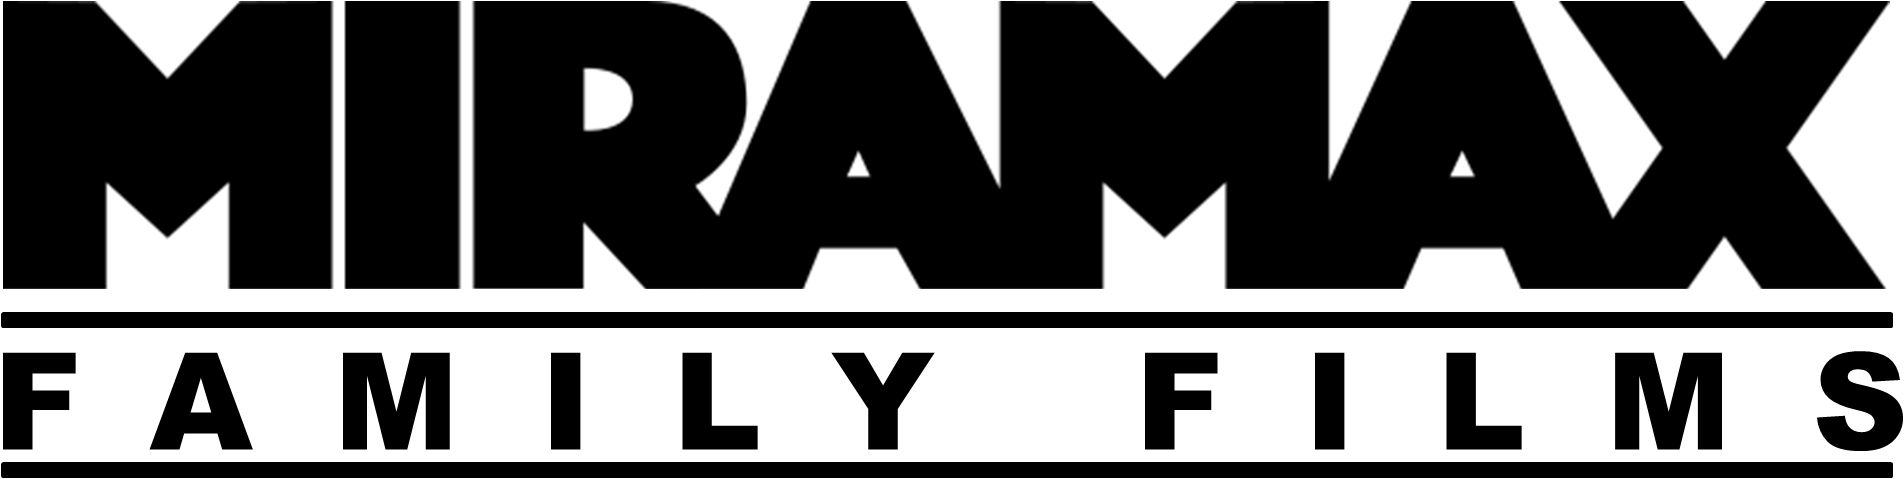 Miramax Logo - Miramax Family Films | Logopedia | FANDOM powered by Wikia